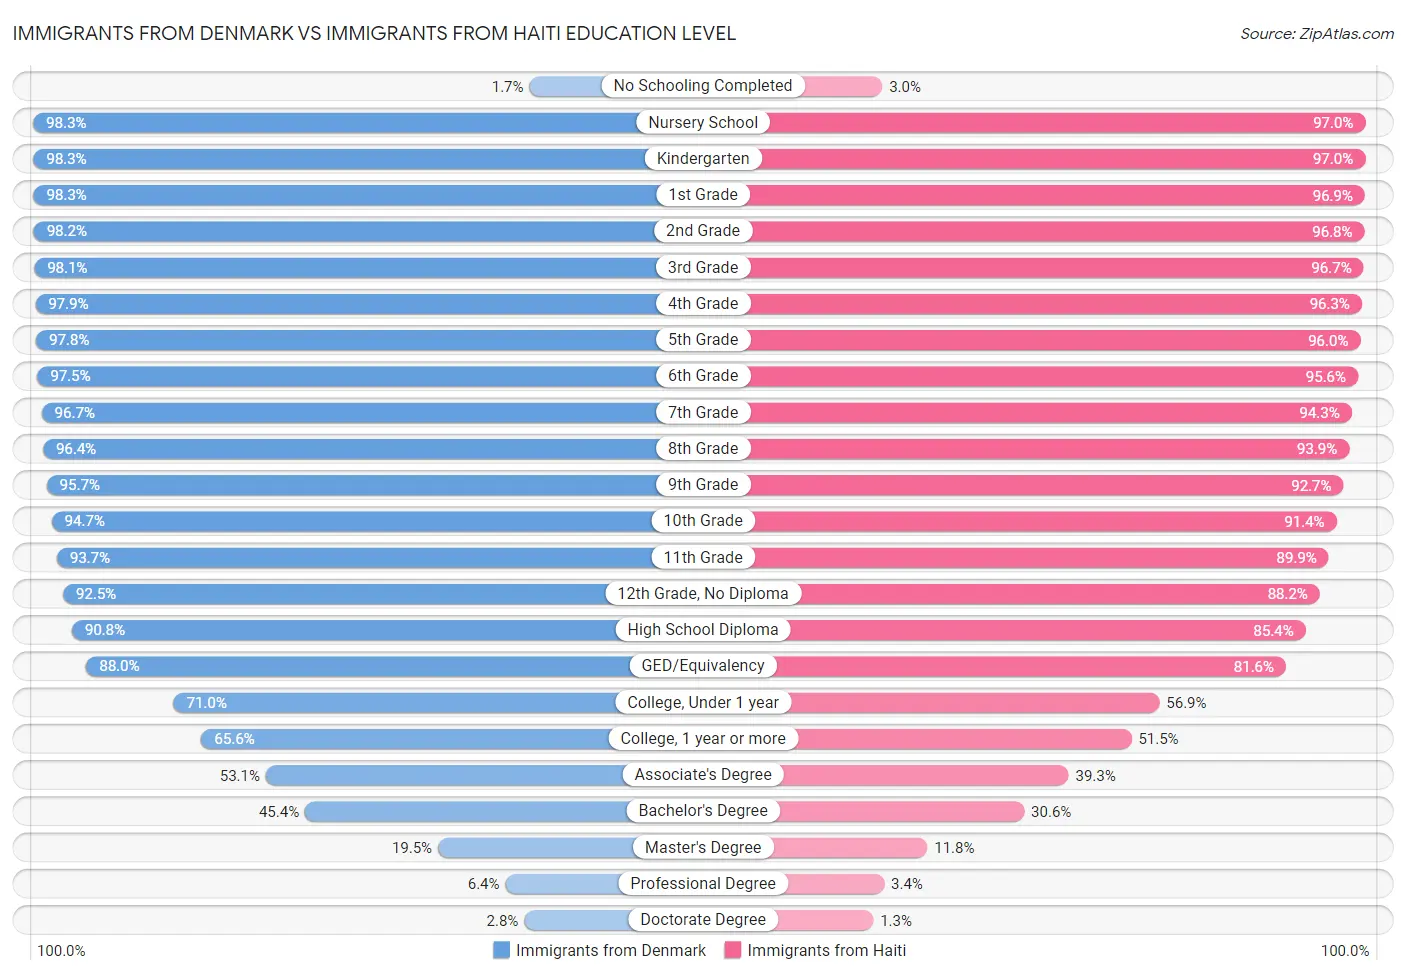 Immigrants from Denmark vs Immigrants from Haiti Education Level